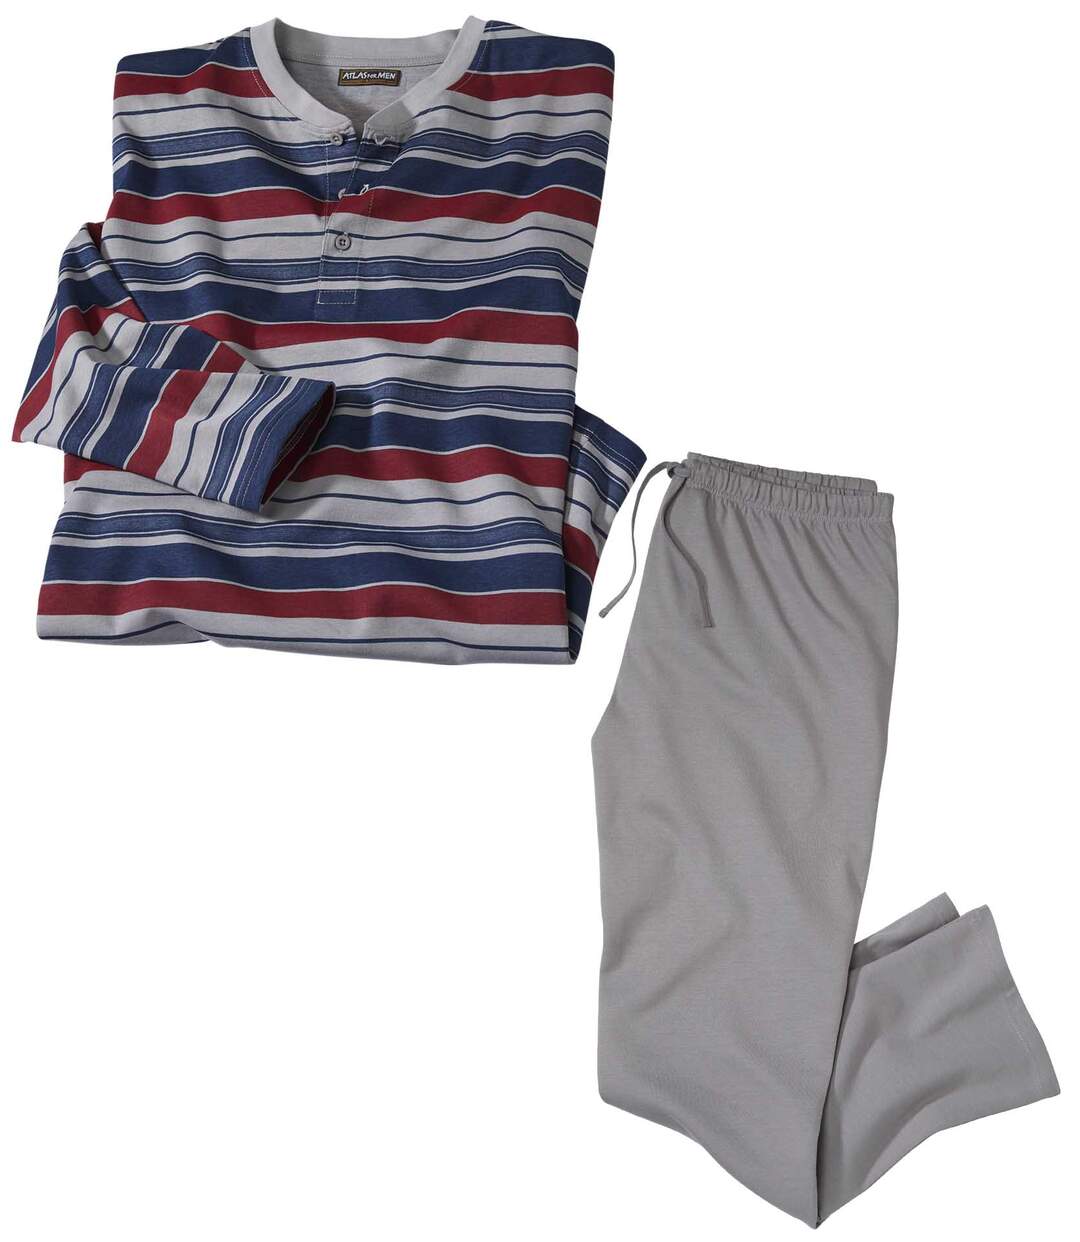 Men's Striped Soft Cotton Pyjamas - Grey, Blue and Burgundy Atlas For Men